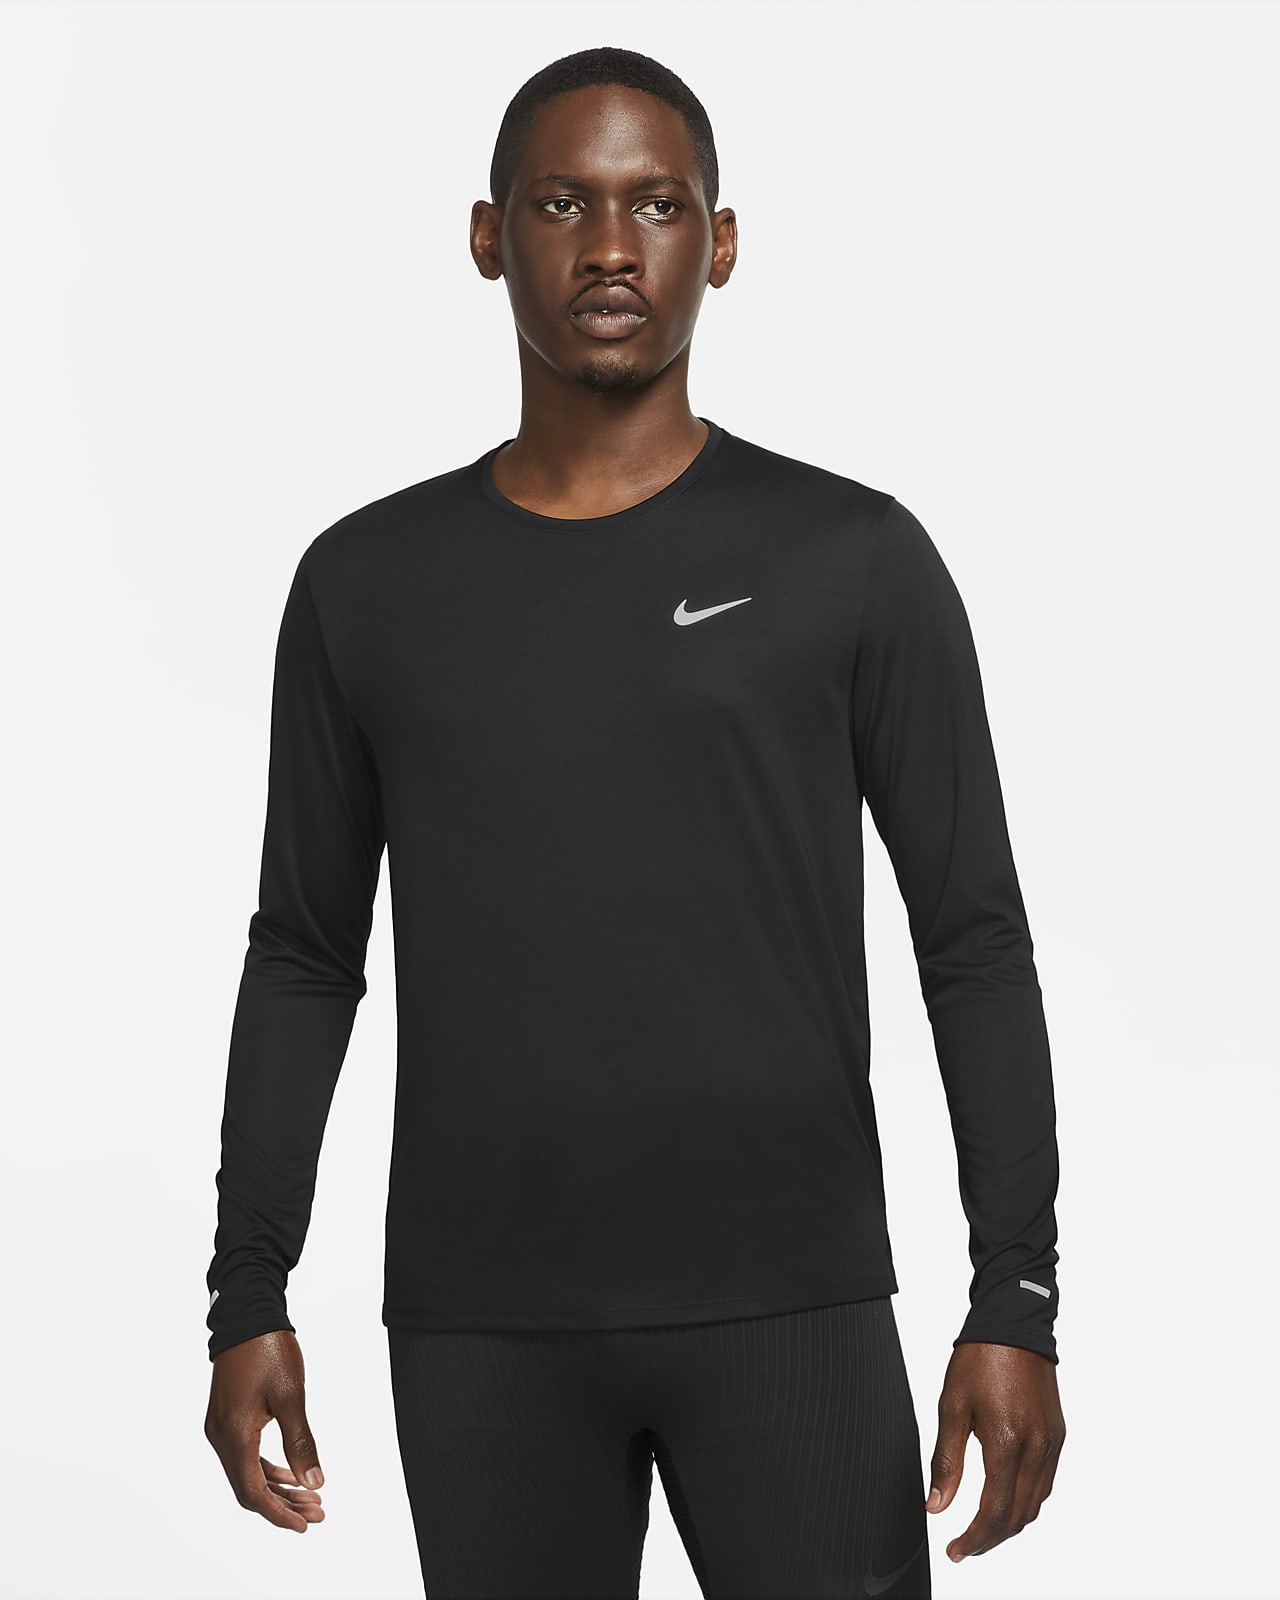 Humane moth Perforation Nike Dri-FIT Miler Men's Long-Sleeve Running Top. Nike.com